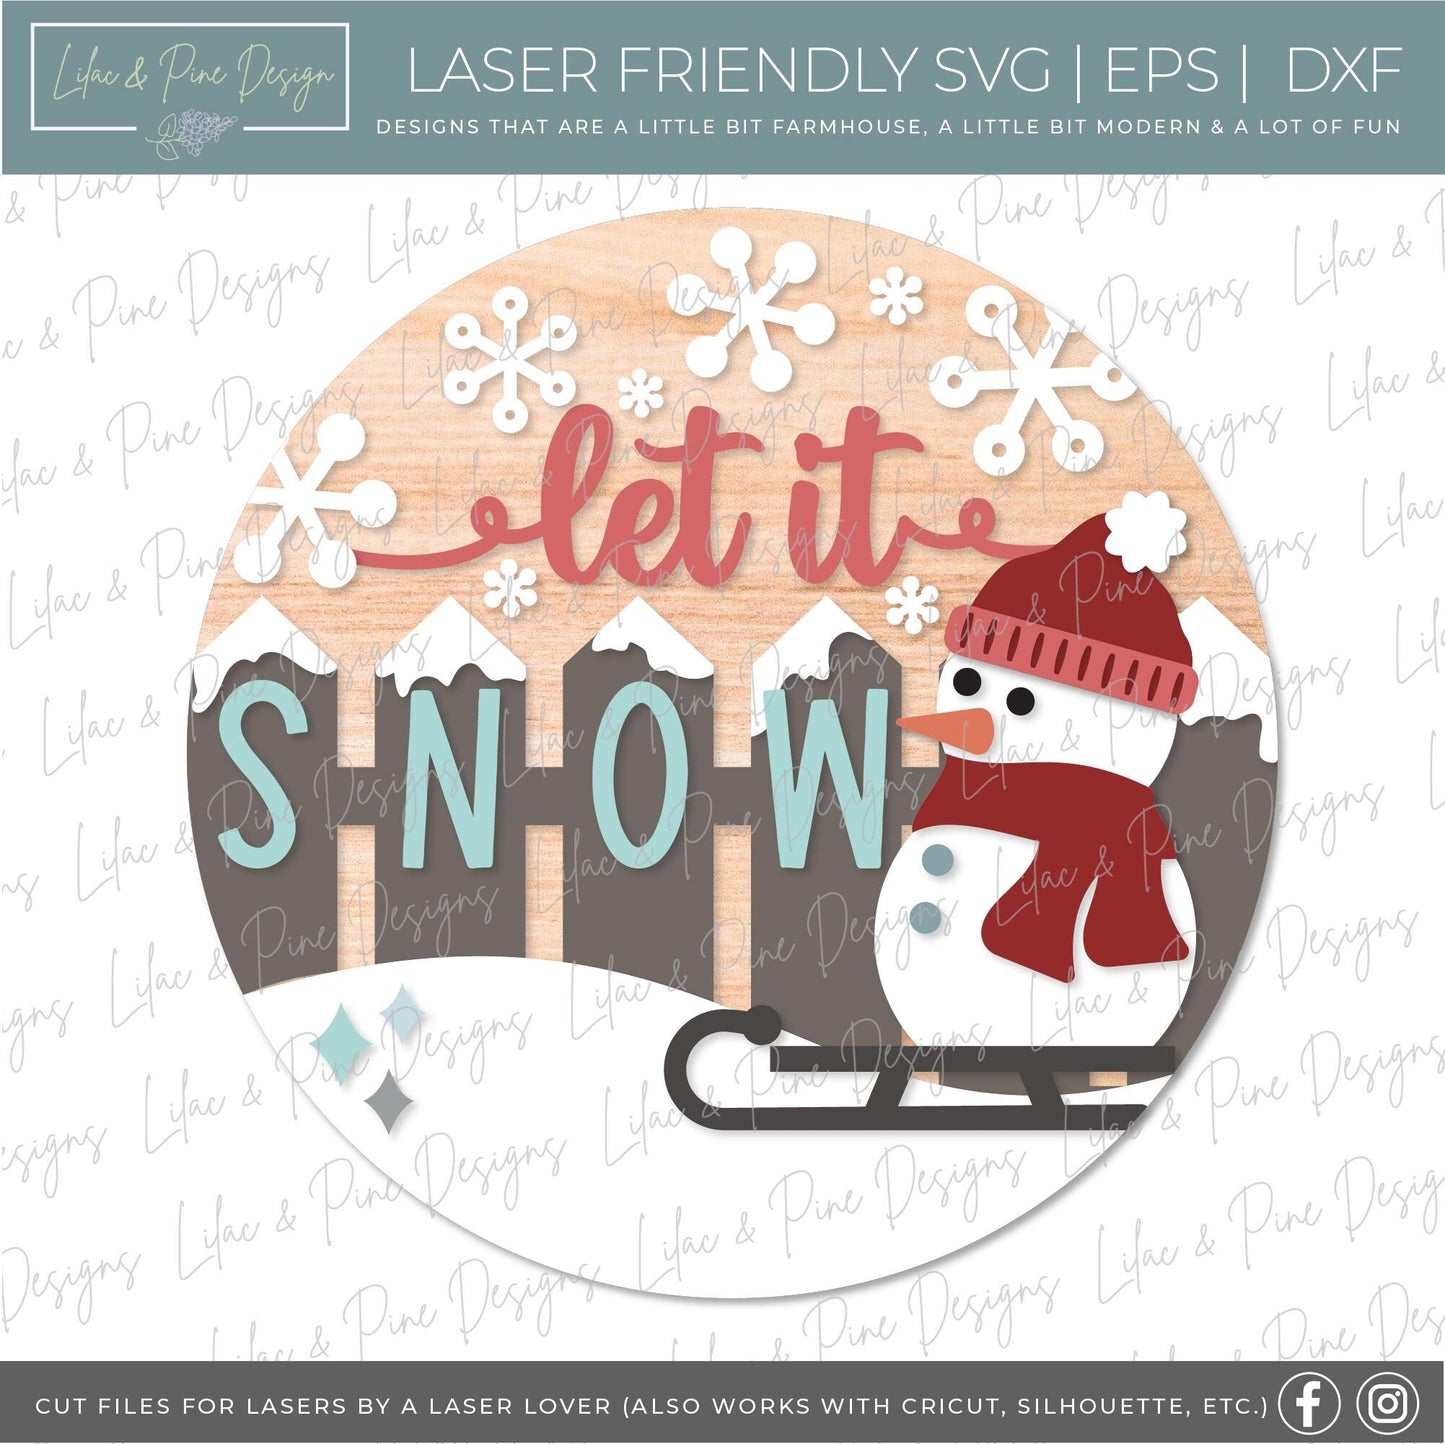 Let it Snow sign SVG, Snowman welcome sign SVG, Winter door hanger SVG, Snowman round sign, Snow pattern sign, Glowforge Svg, laser cut file